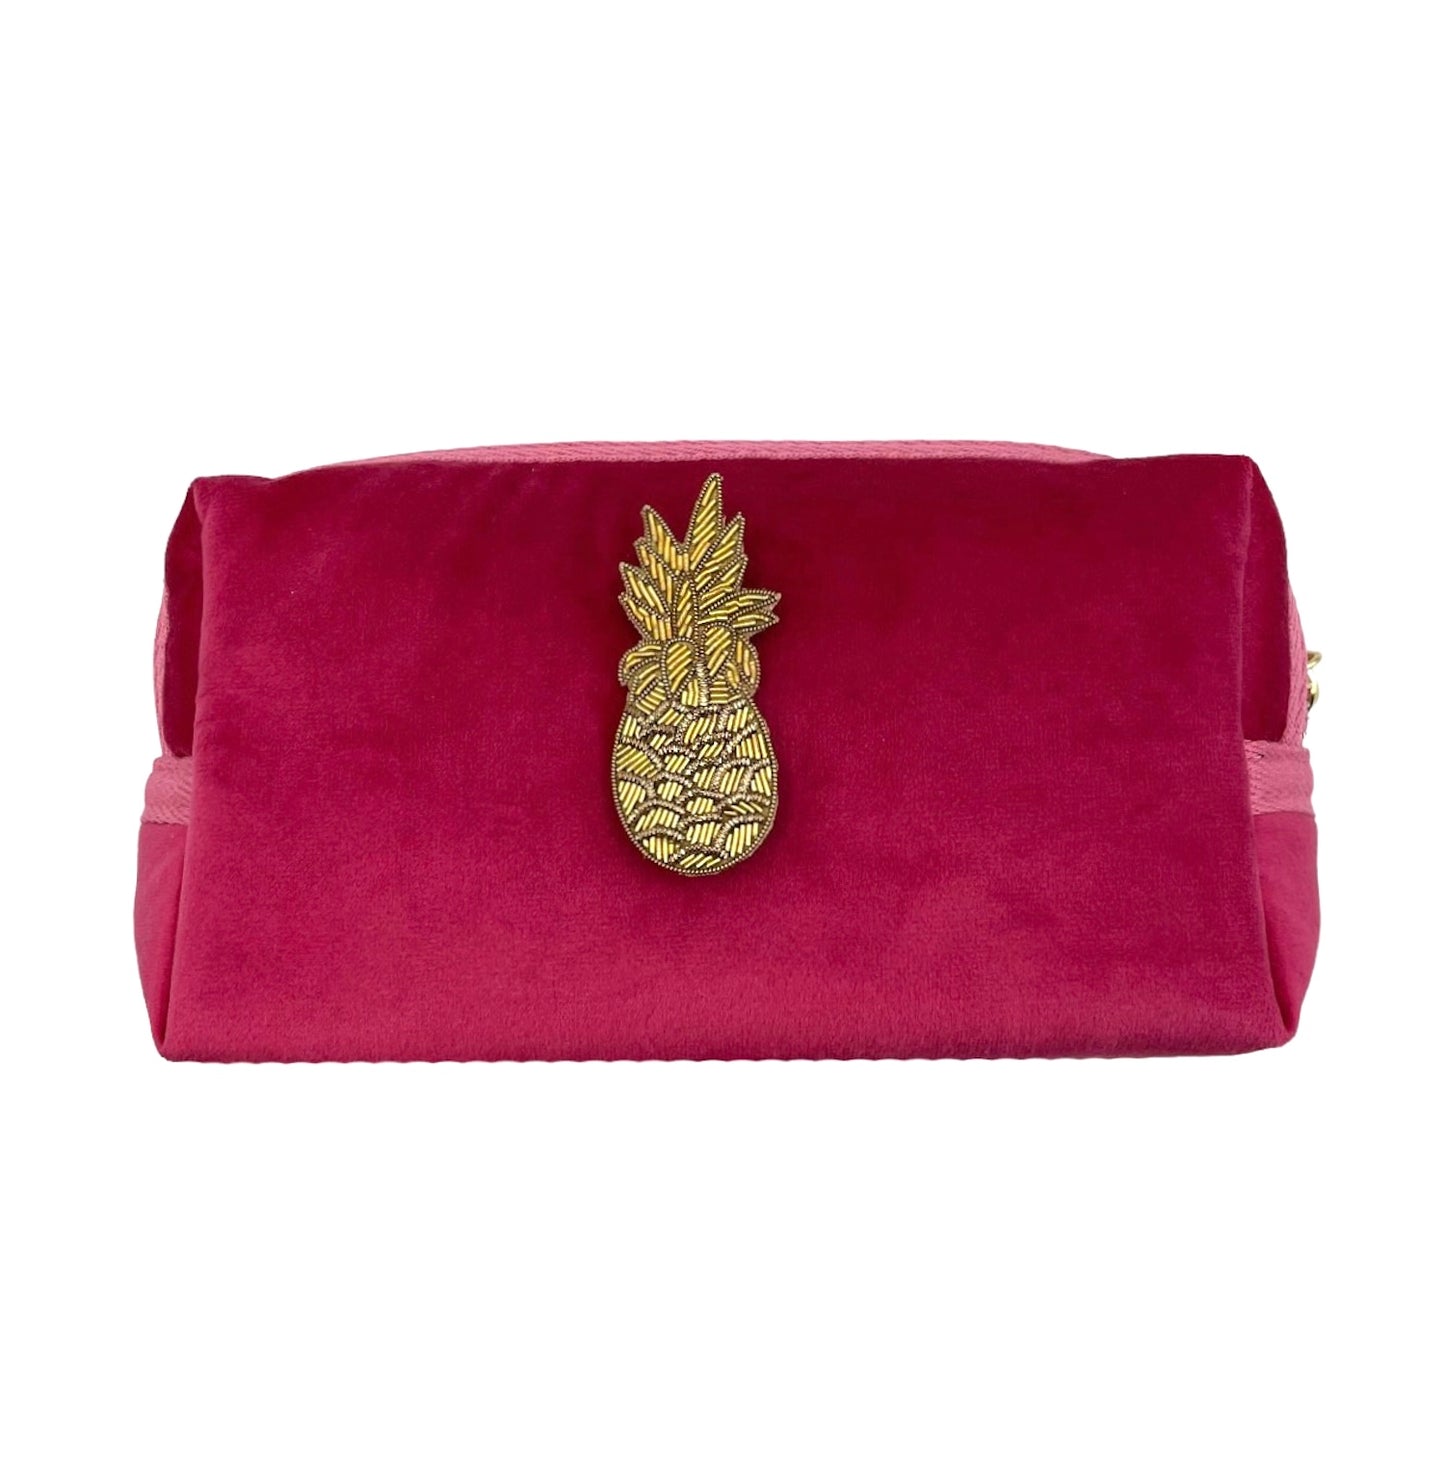 Bright pink make-up bag & pineapple pin - recycled velvet